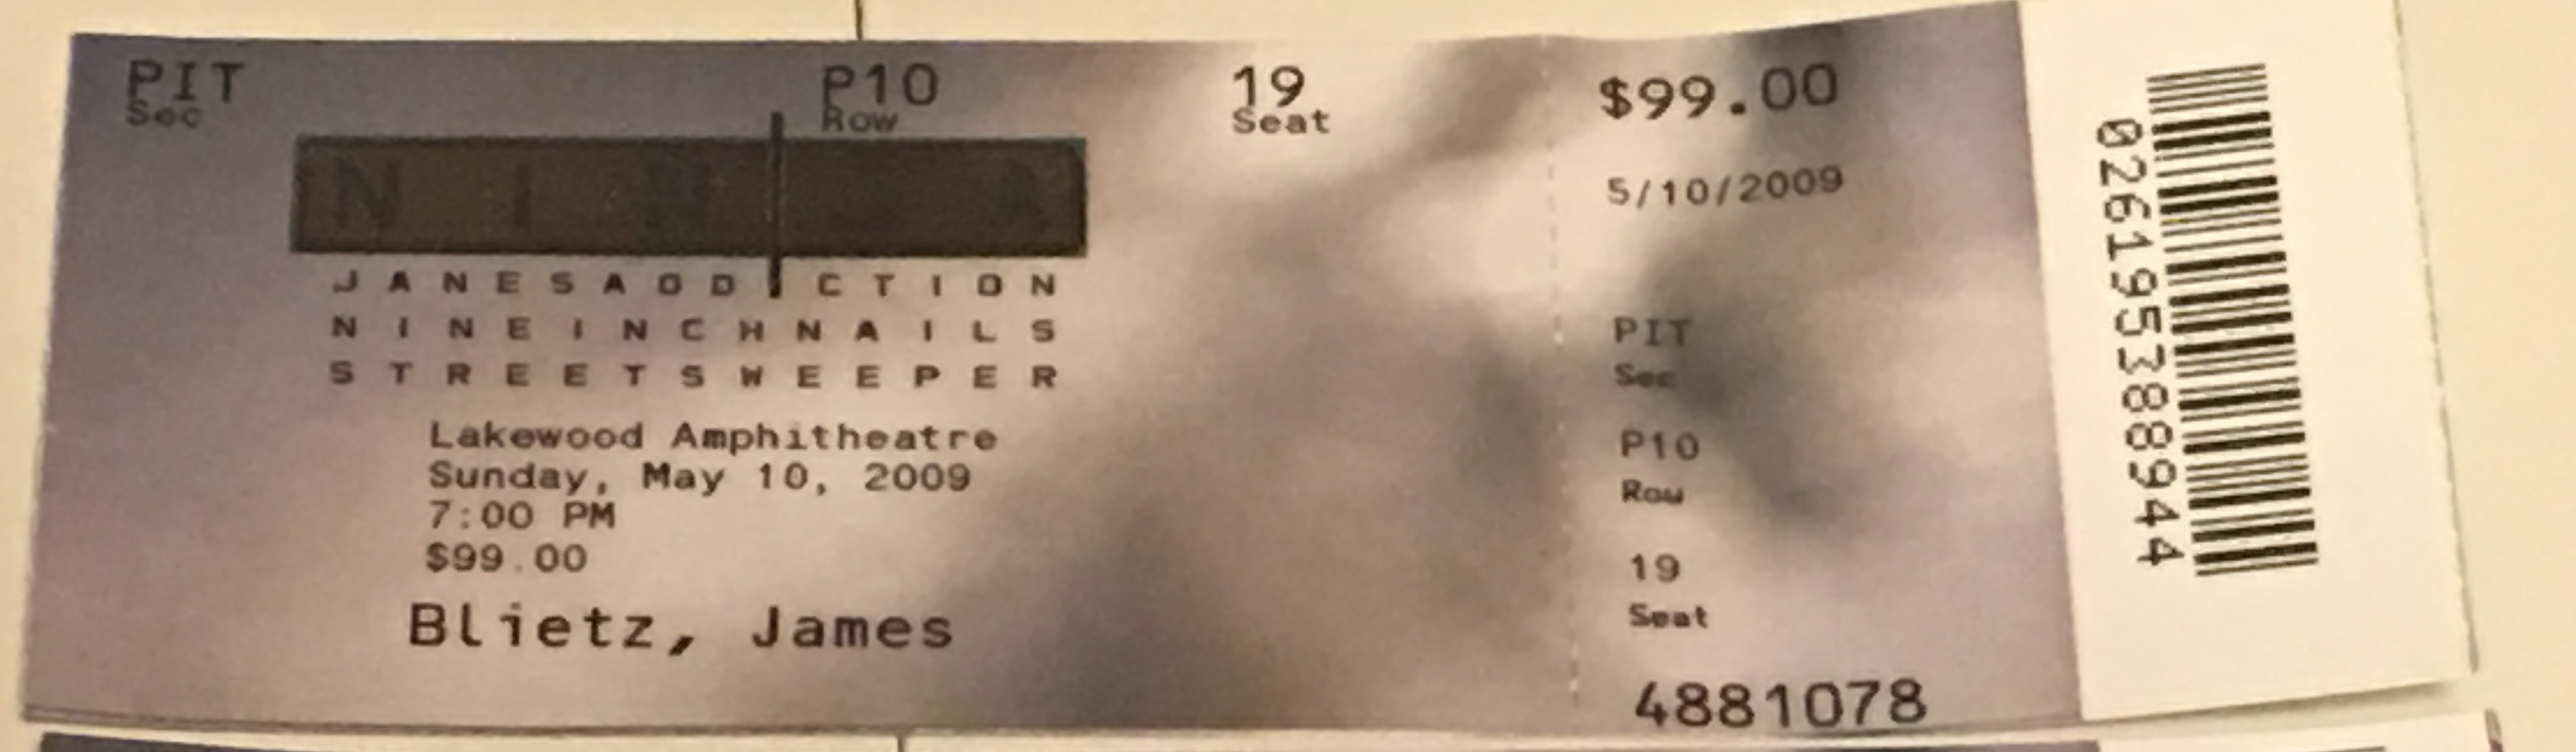 2009/05/10 Ticket